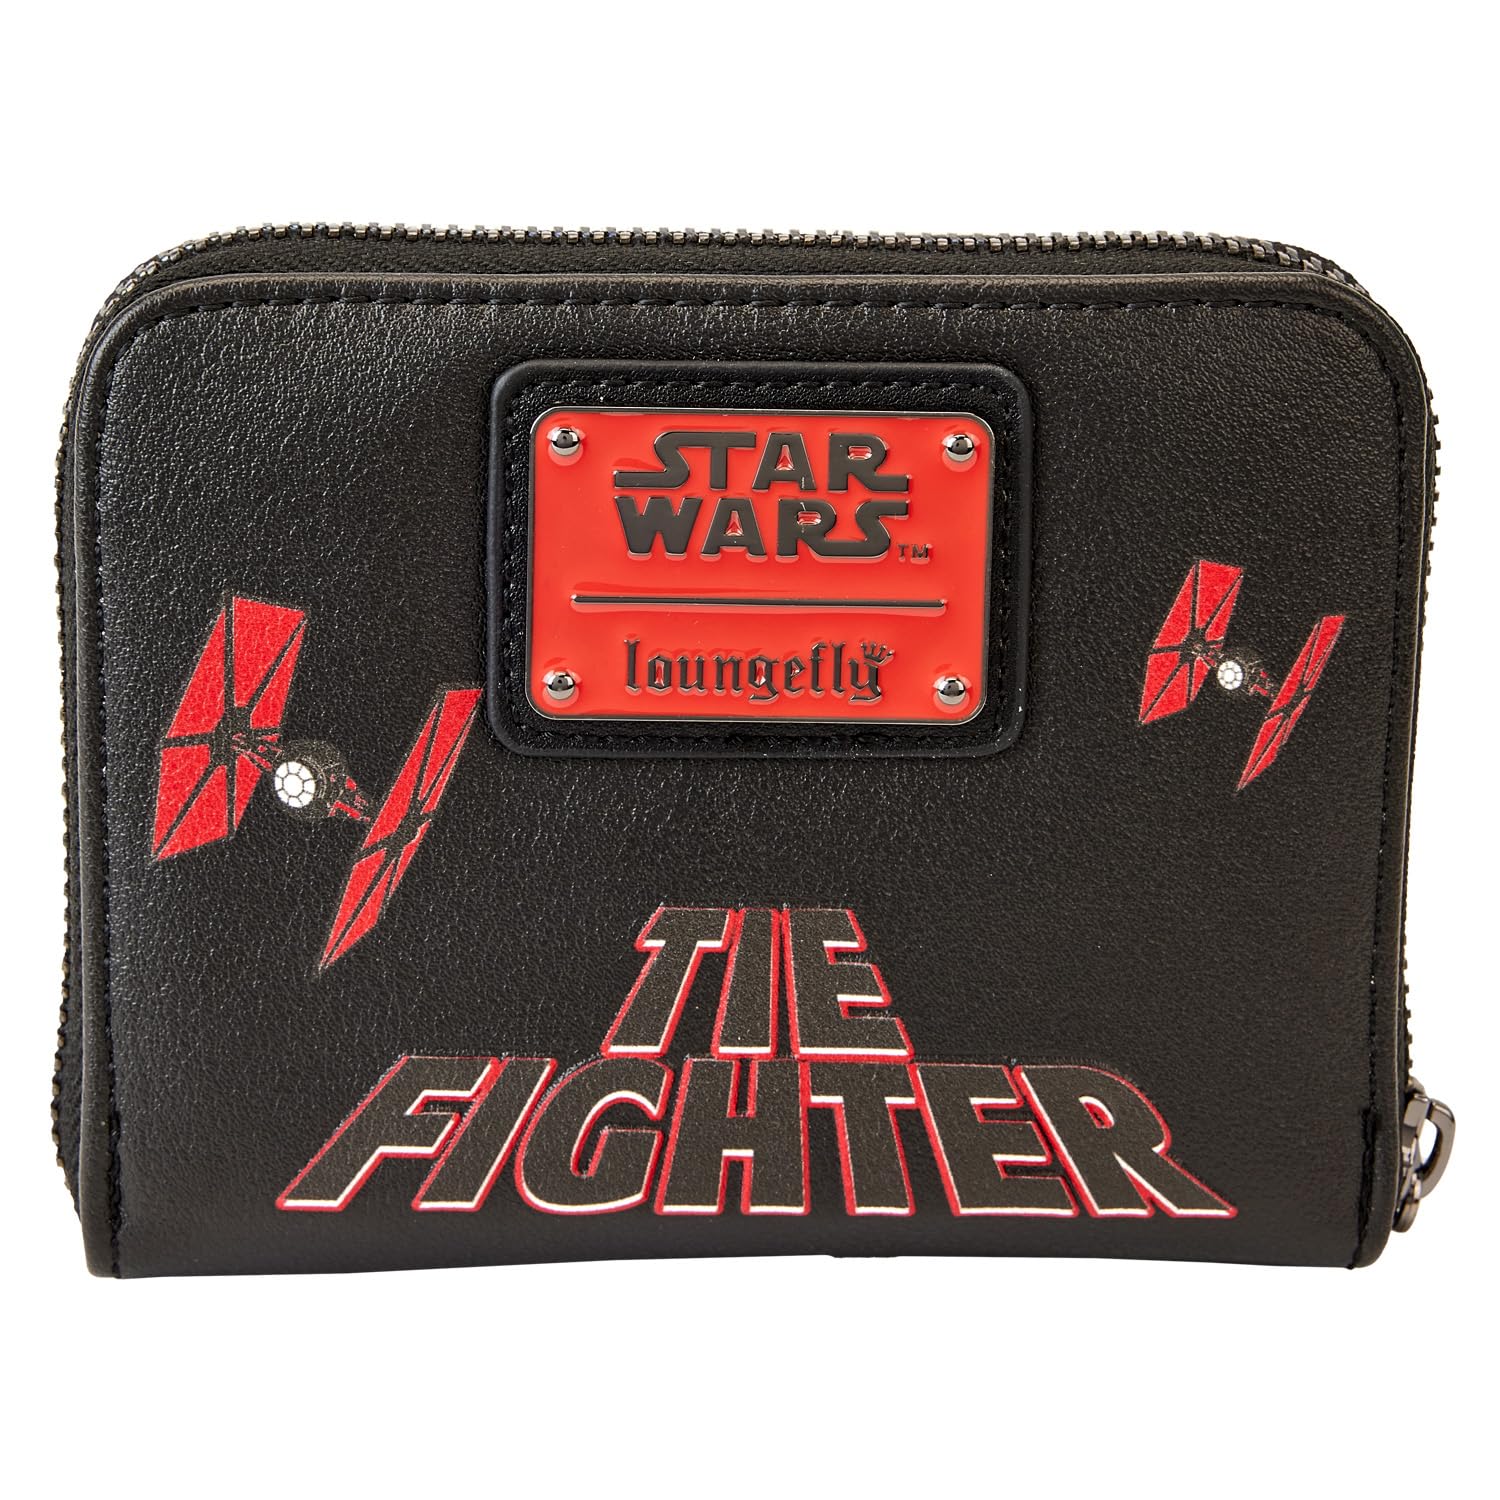 Loungefly Star Wars: Tie Fighter Lenticular Wallet, Amazon Exclusive